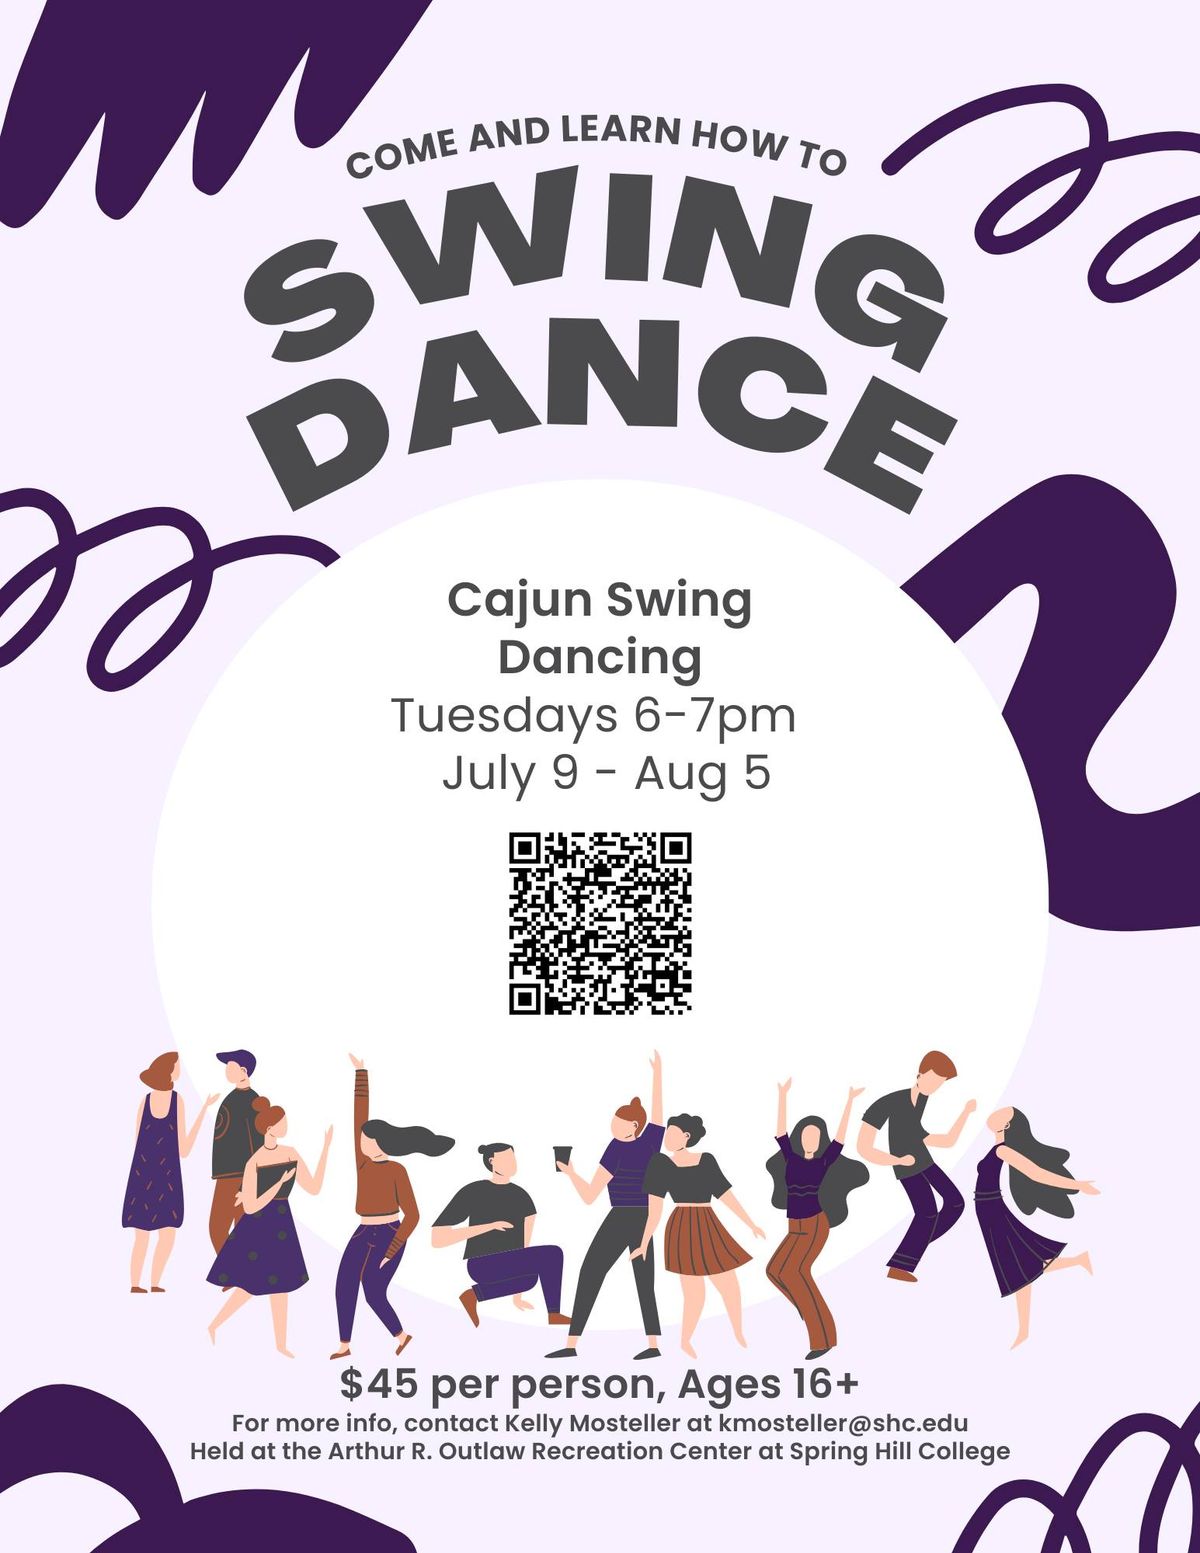 Cajun Swing Dance Lessons 